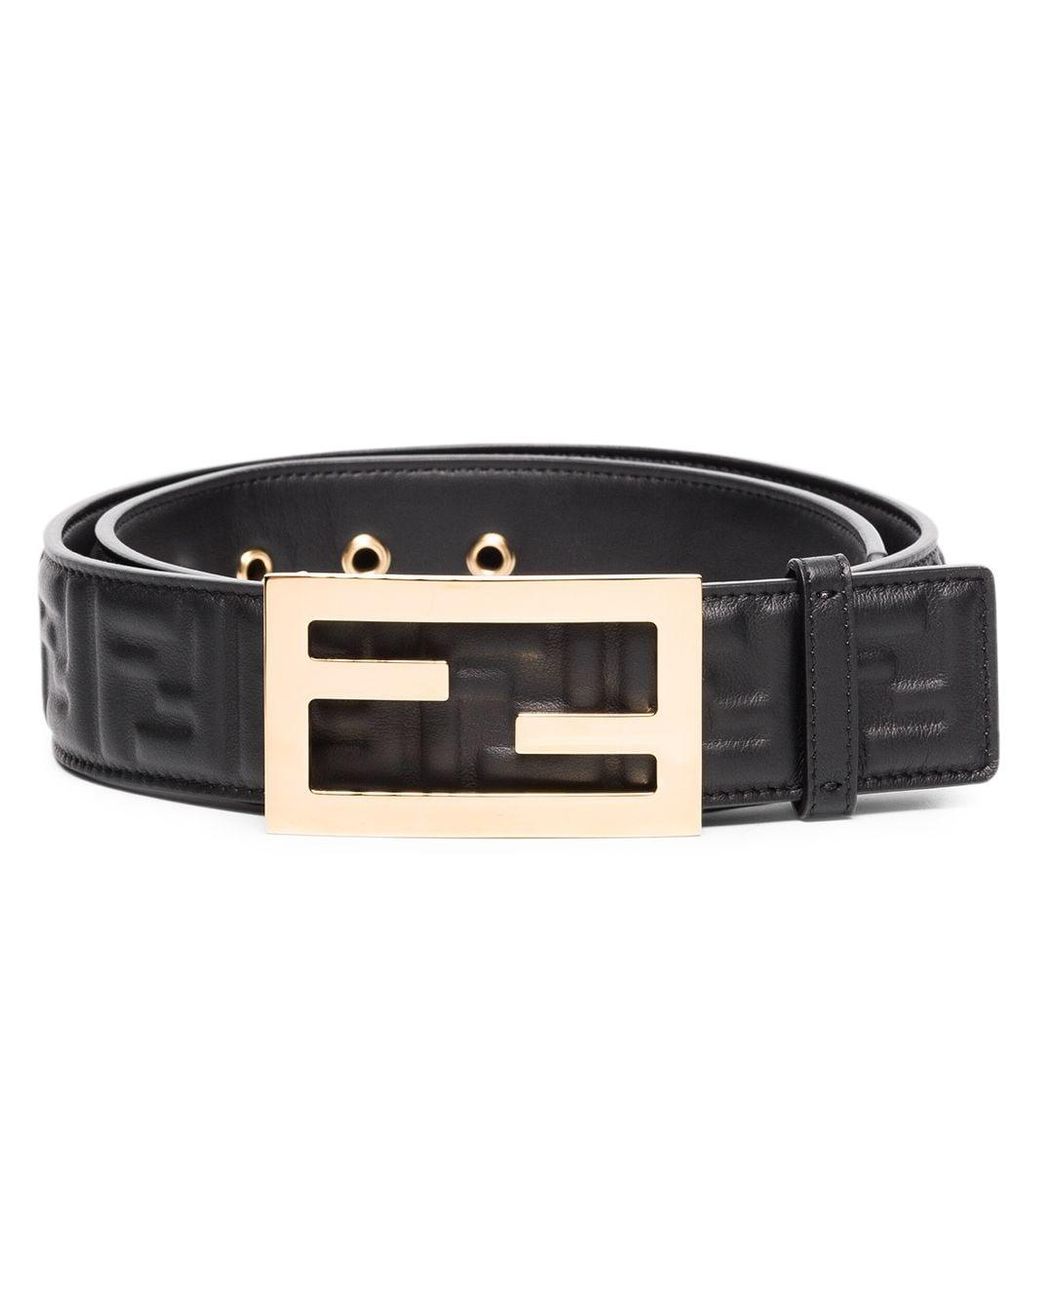 Fendi Leather Ff Baguette Belt in Black - Lyst